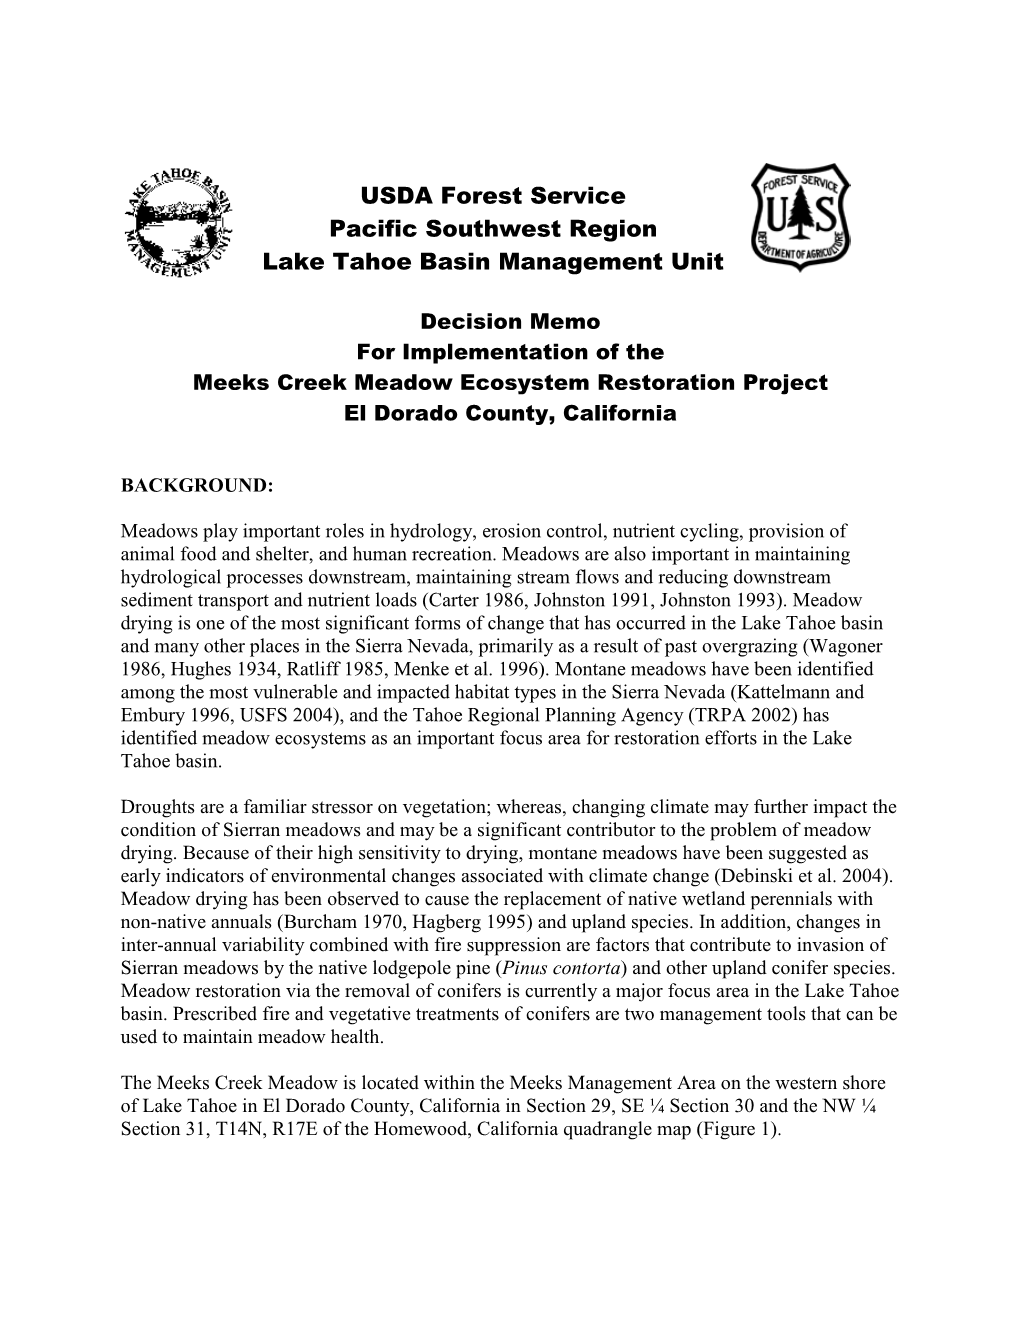 Meeks Creek Meadow Ecosystem Restoration Project Decision Memo